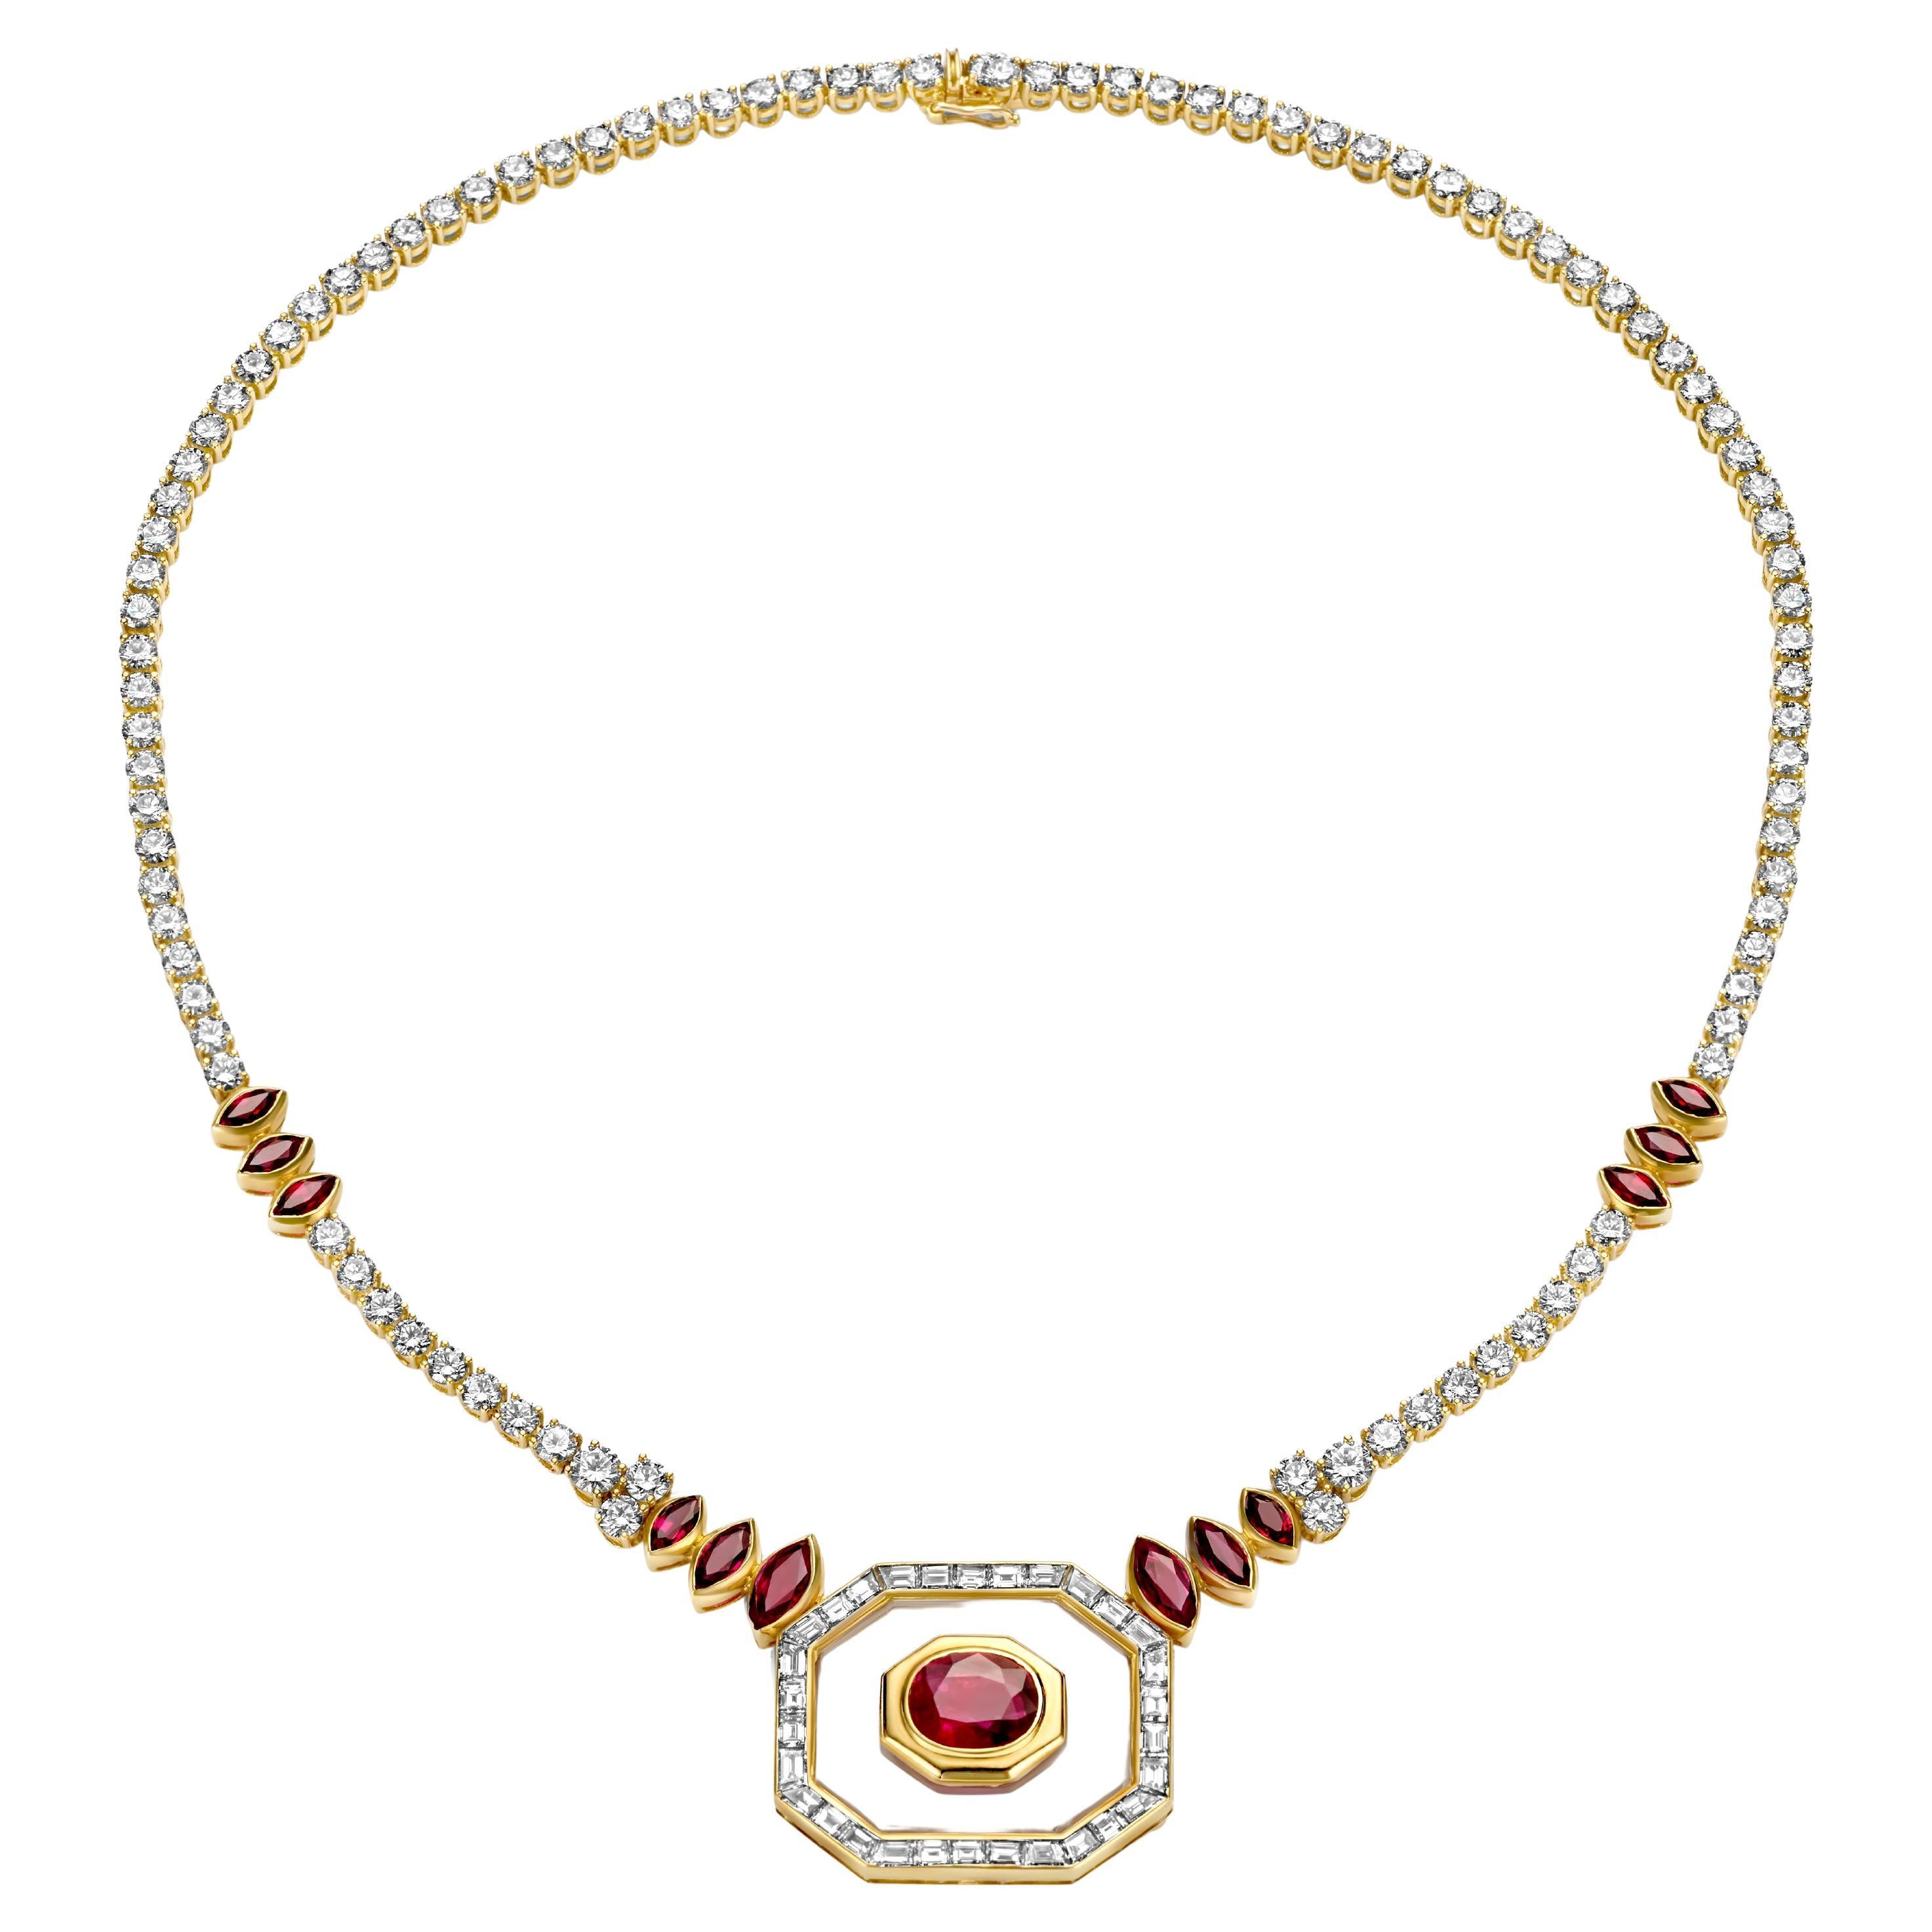 Asprey London Collier de rubis et diamants, succession du sultan Oman Qaboos Bin Said 